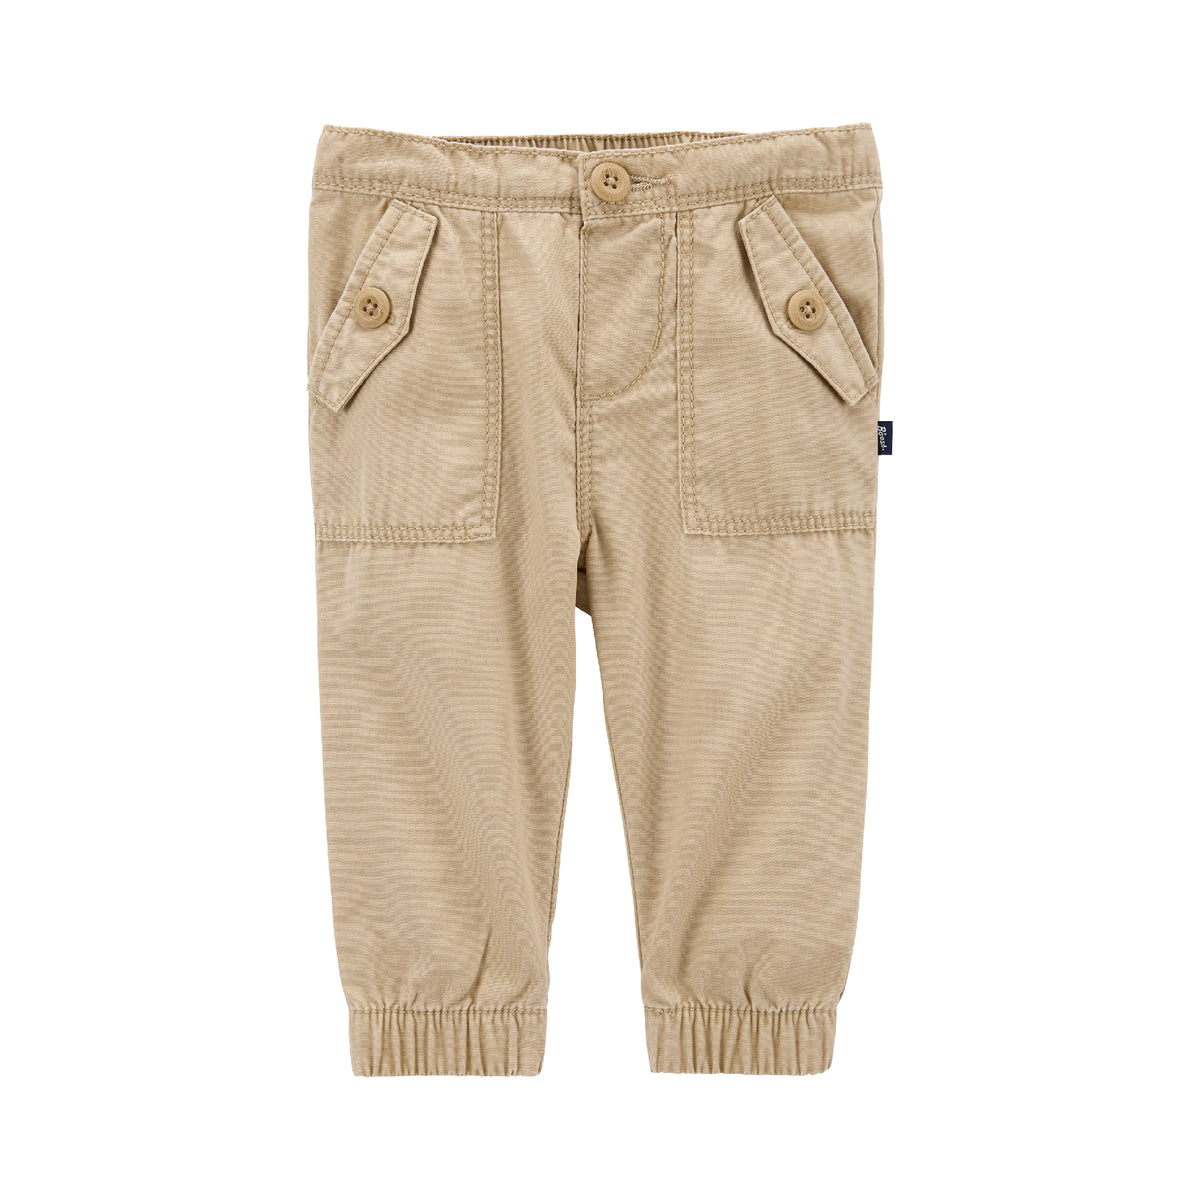 OshKosh brown casual trousers (12M-24M)